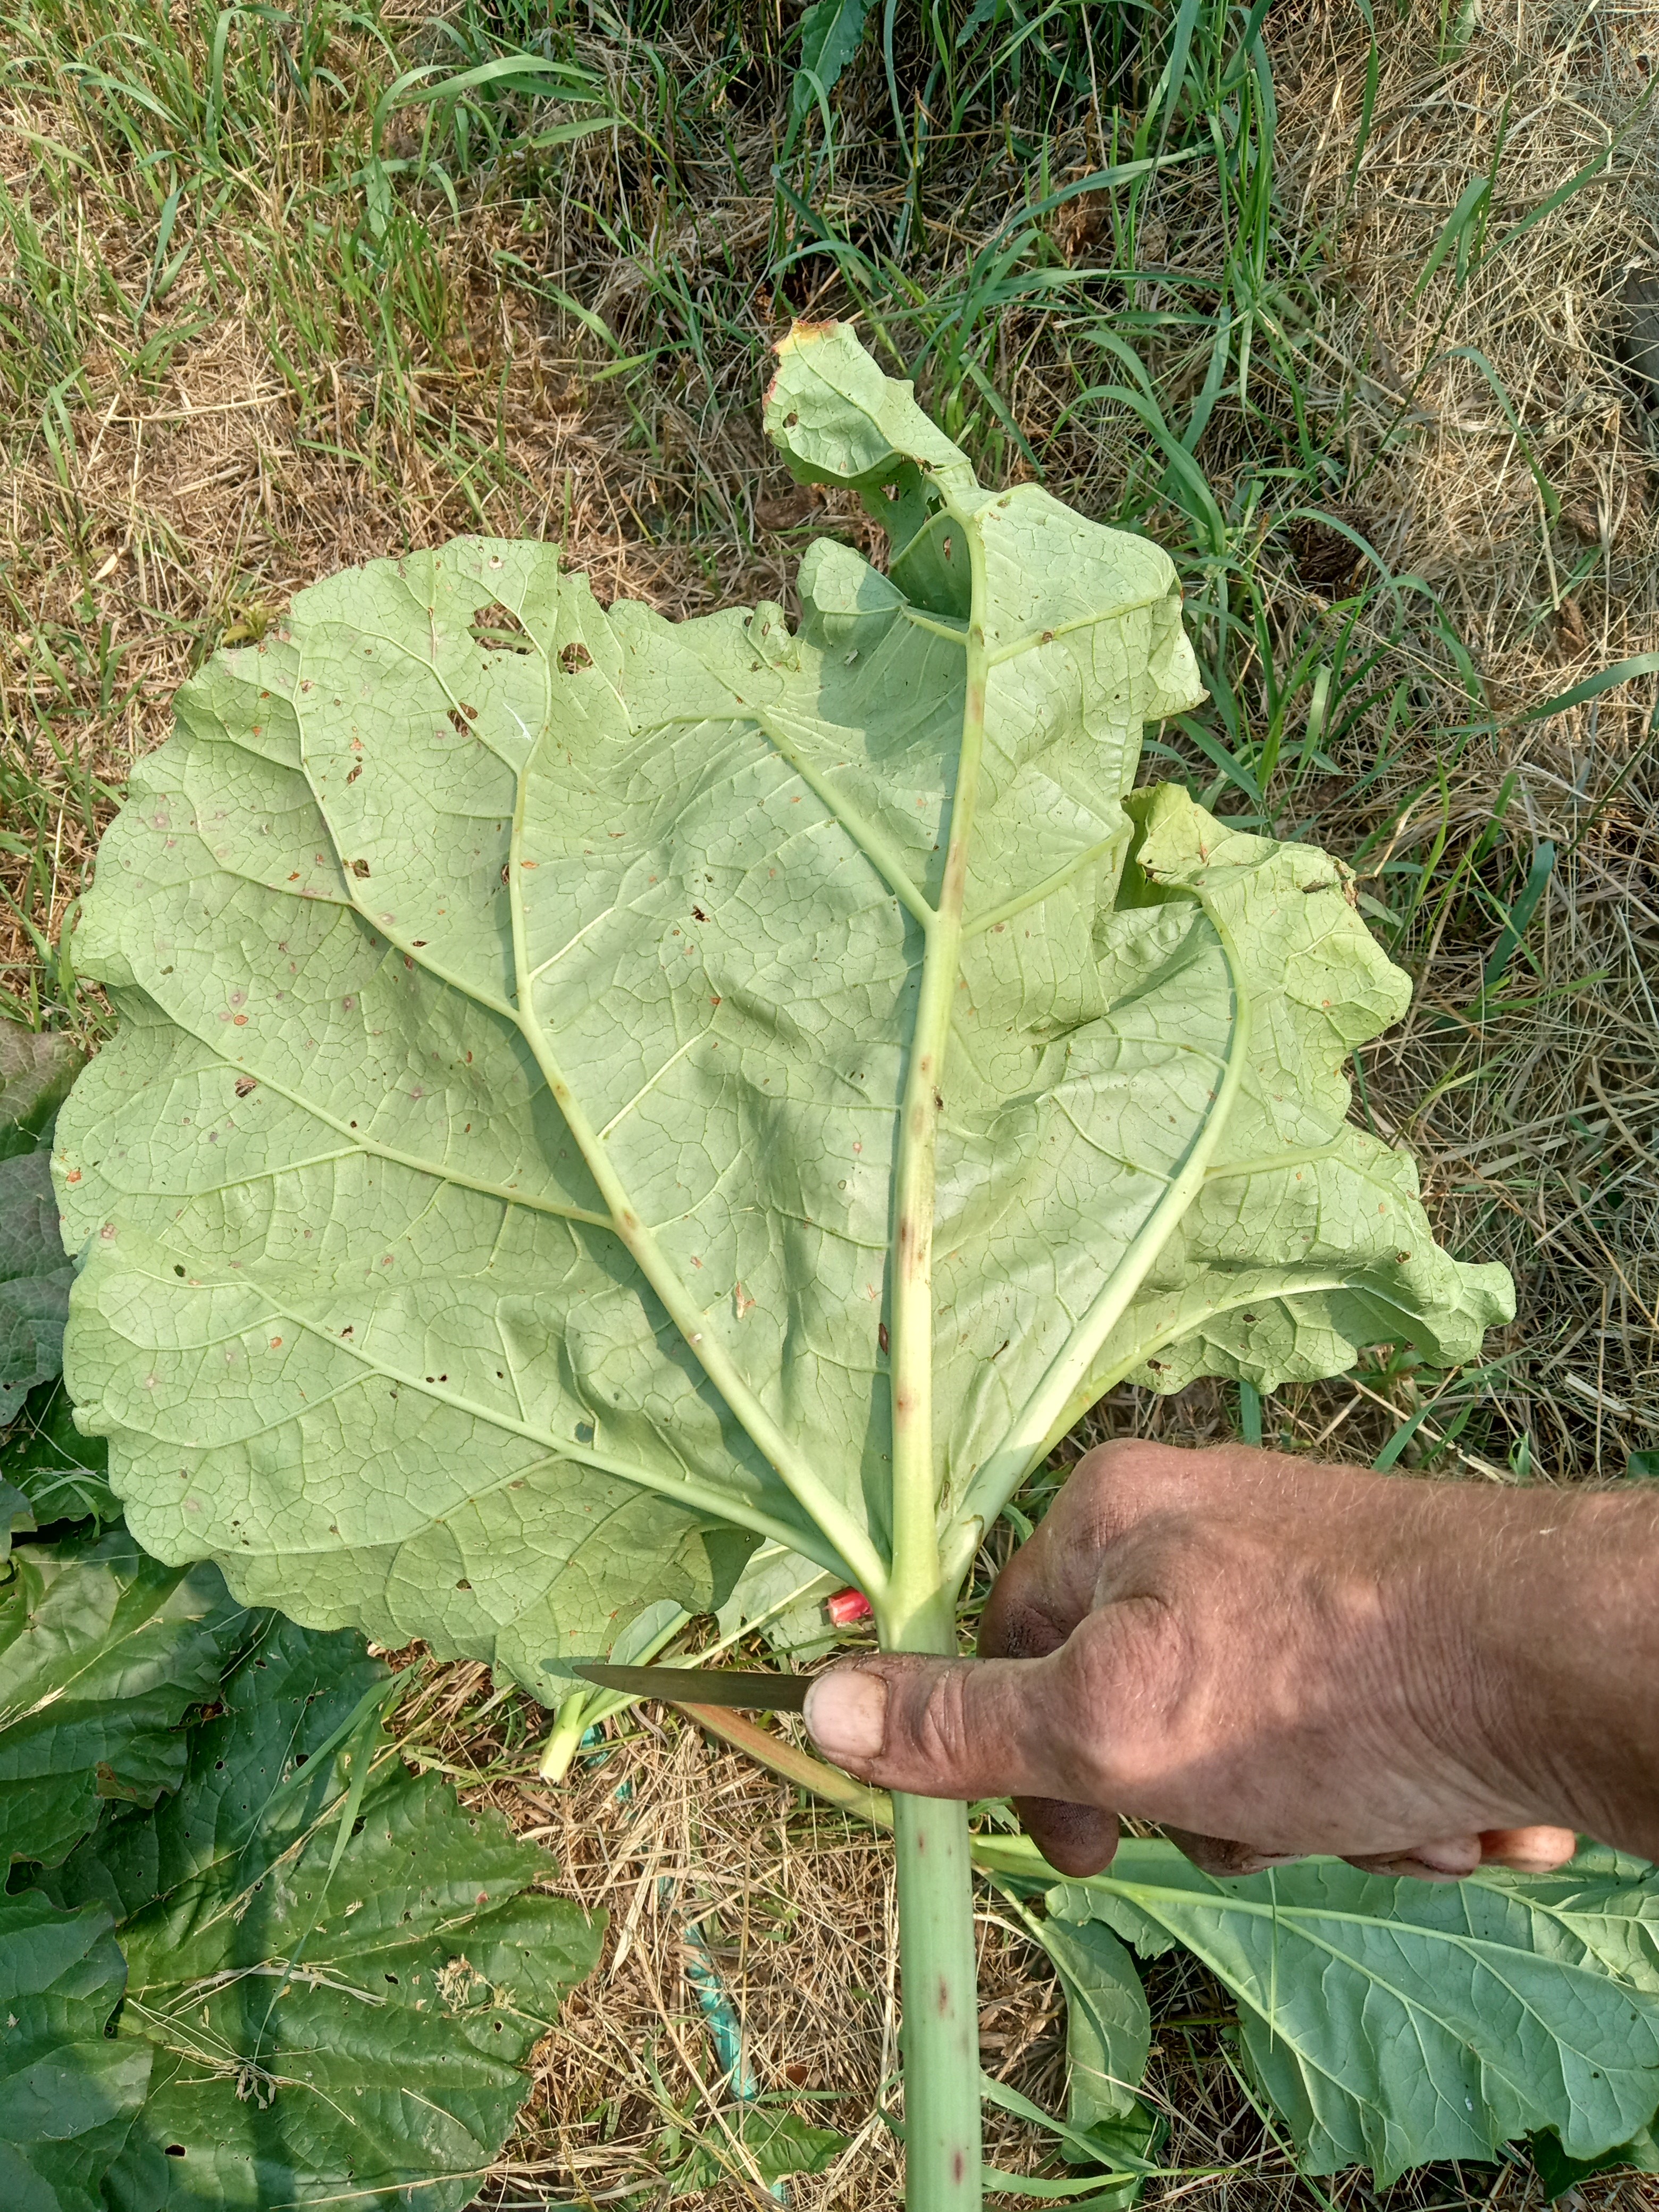 Harvesting  Rhubarb - removing the leaf